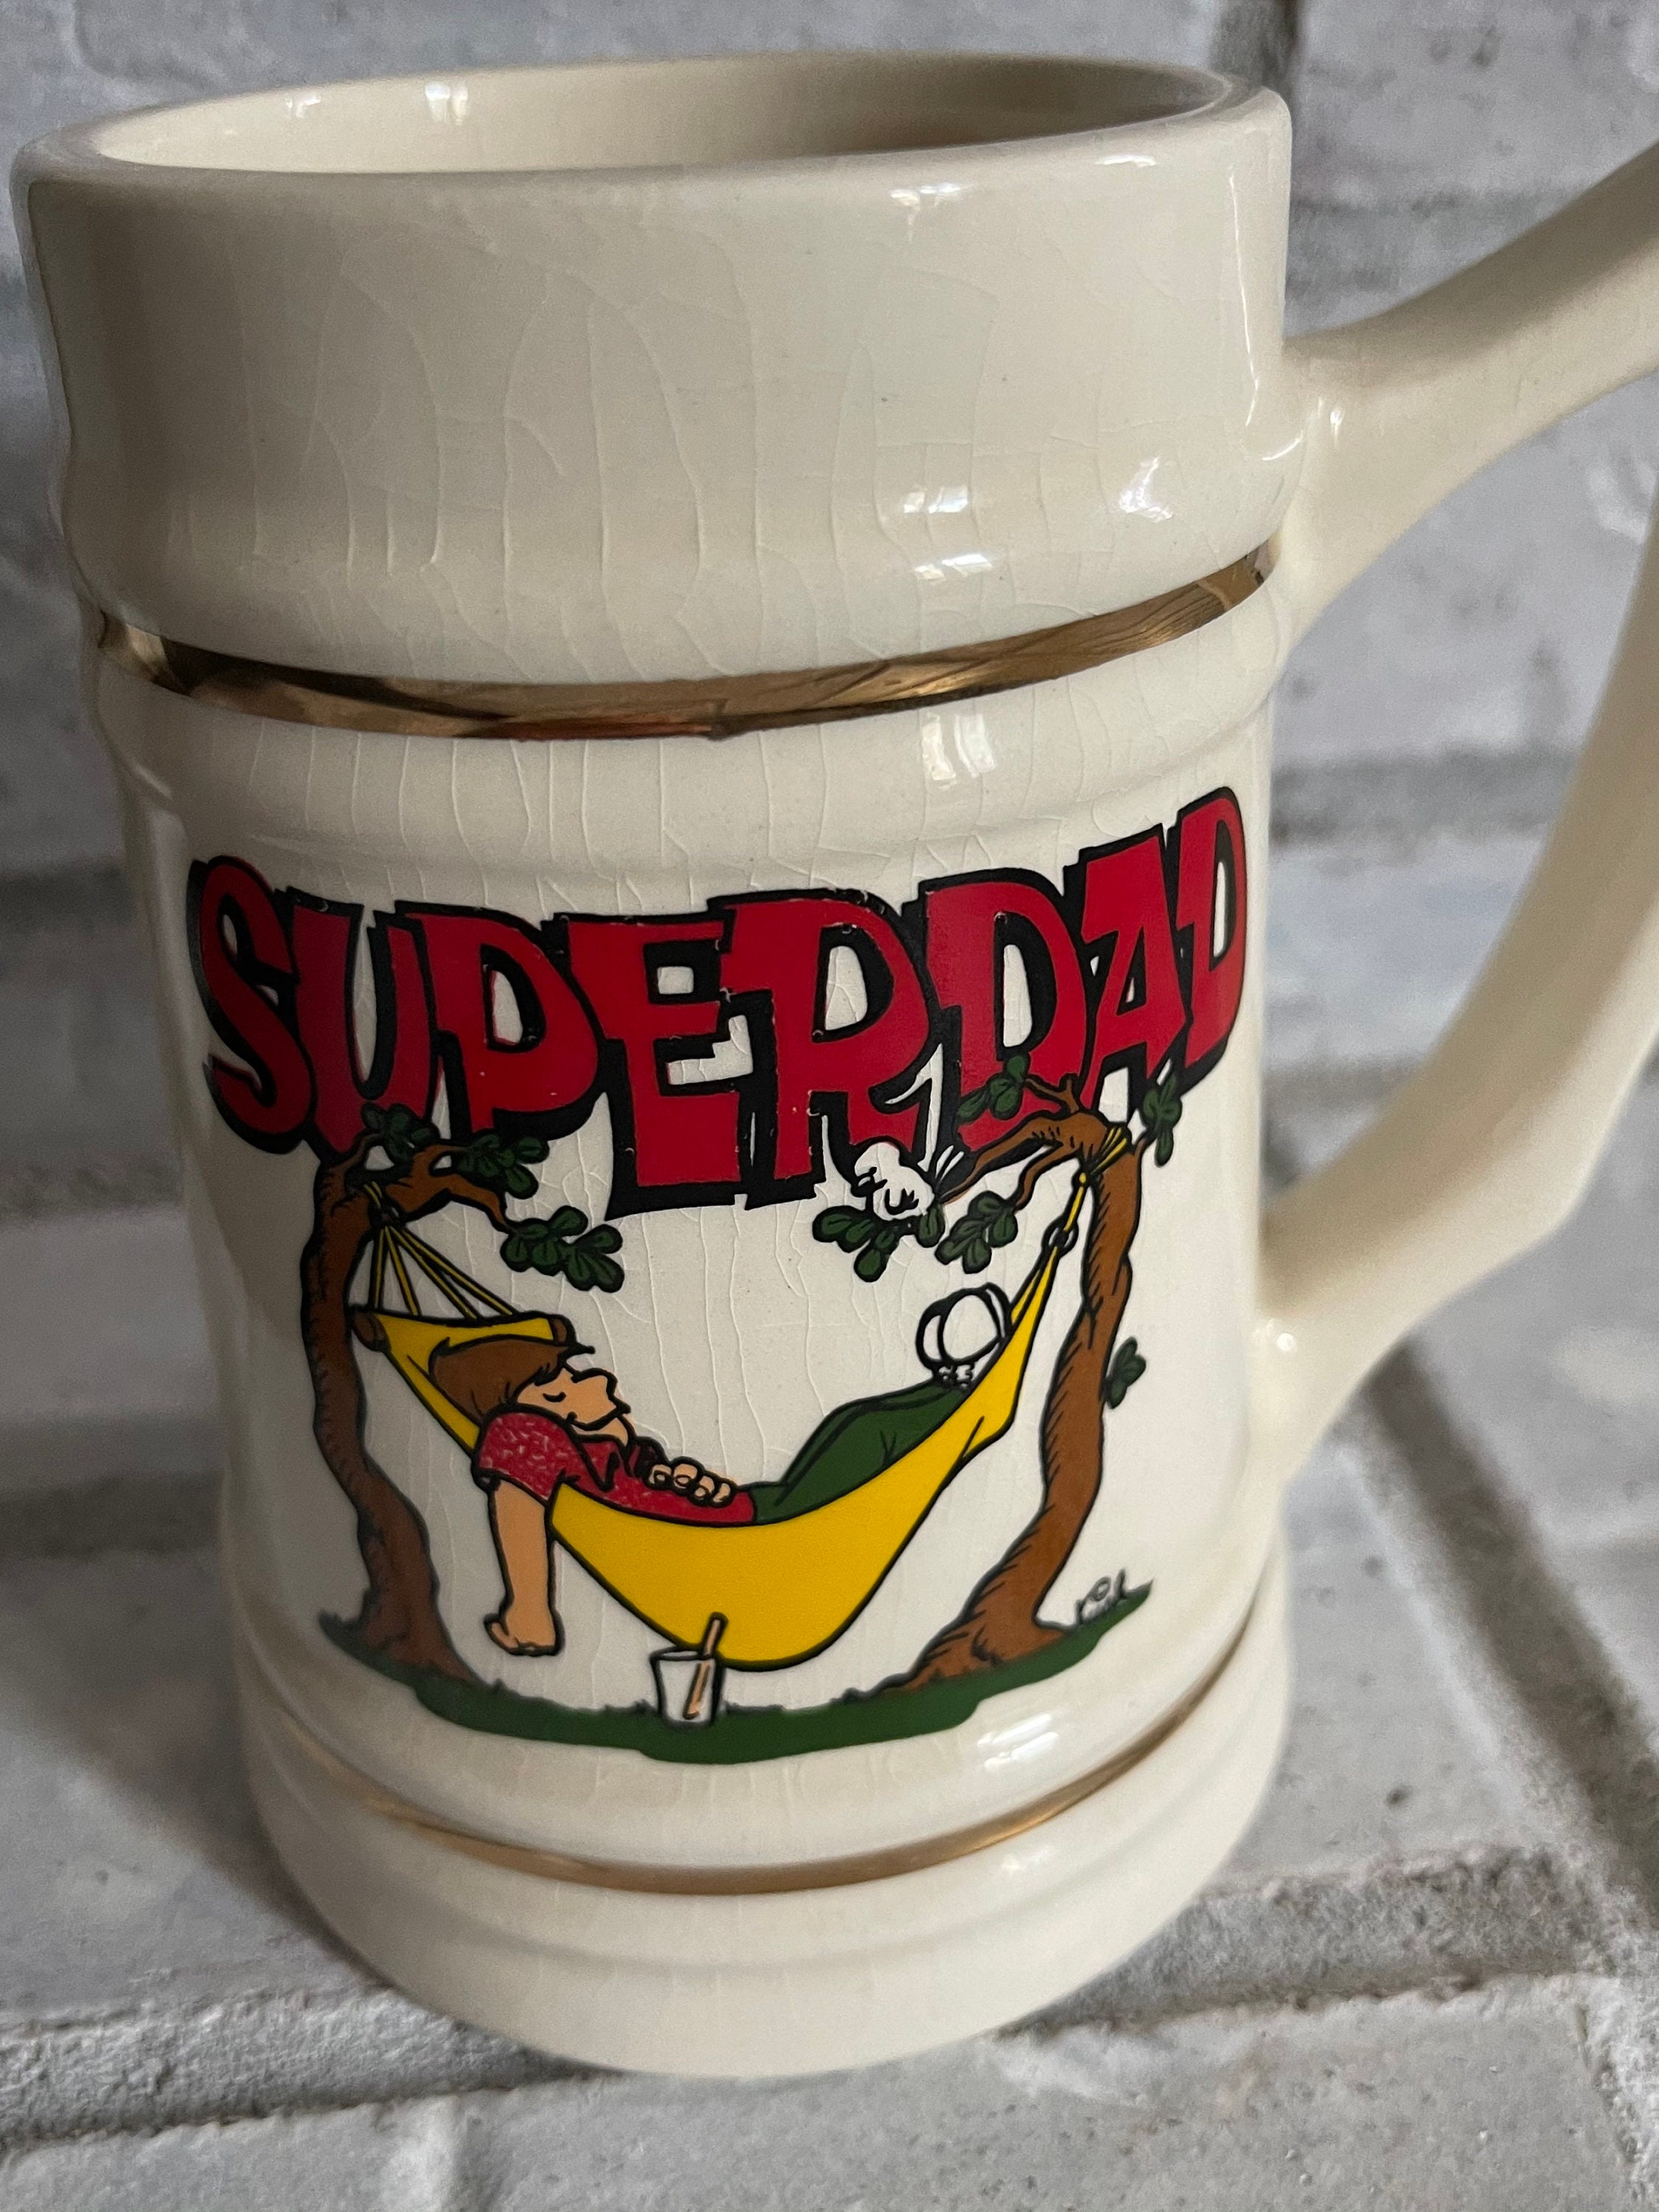 Super Dad Travel Mug – Planet Fan Cave